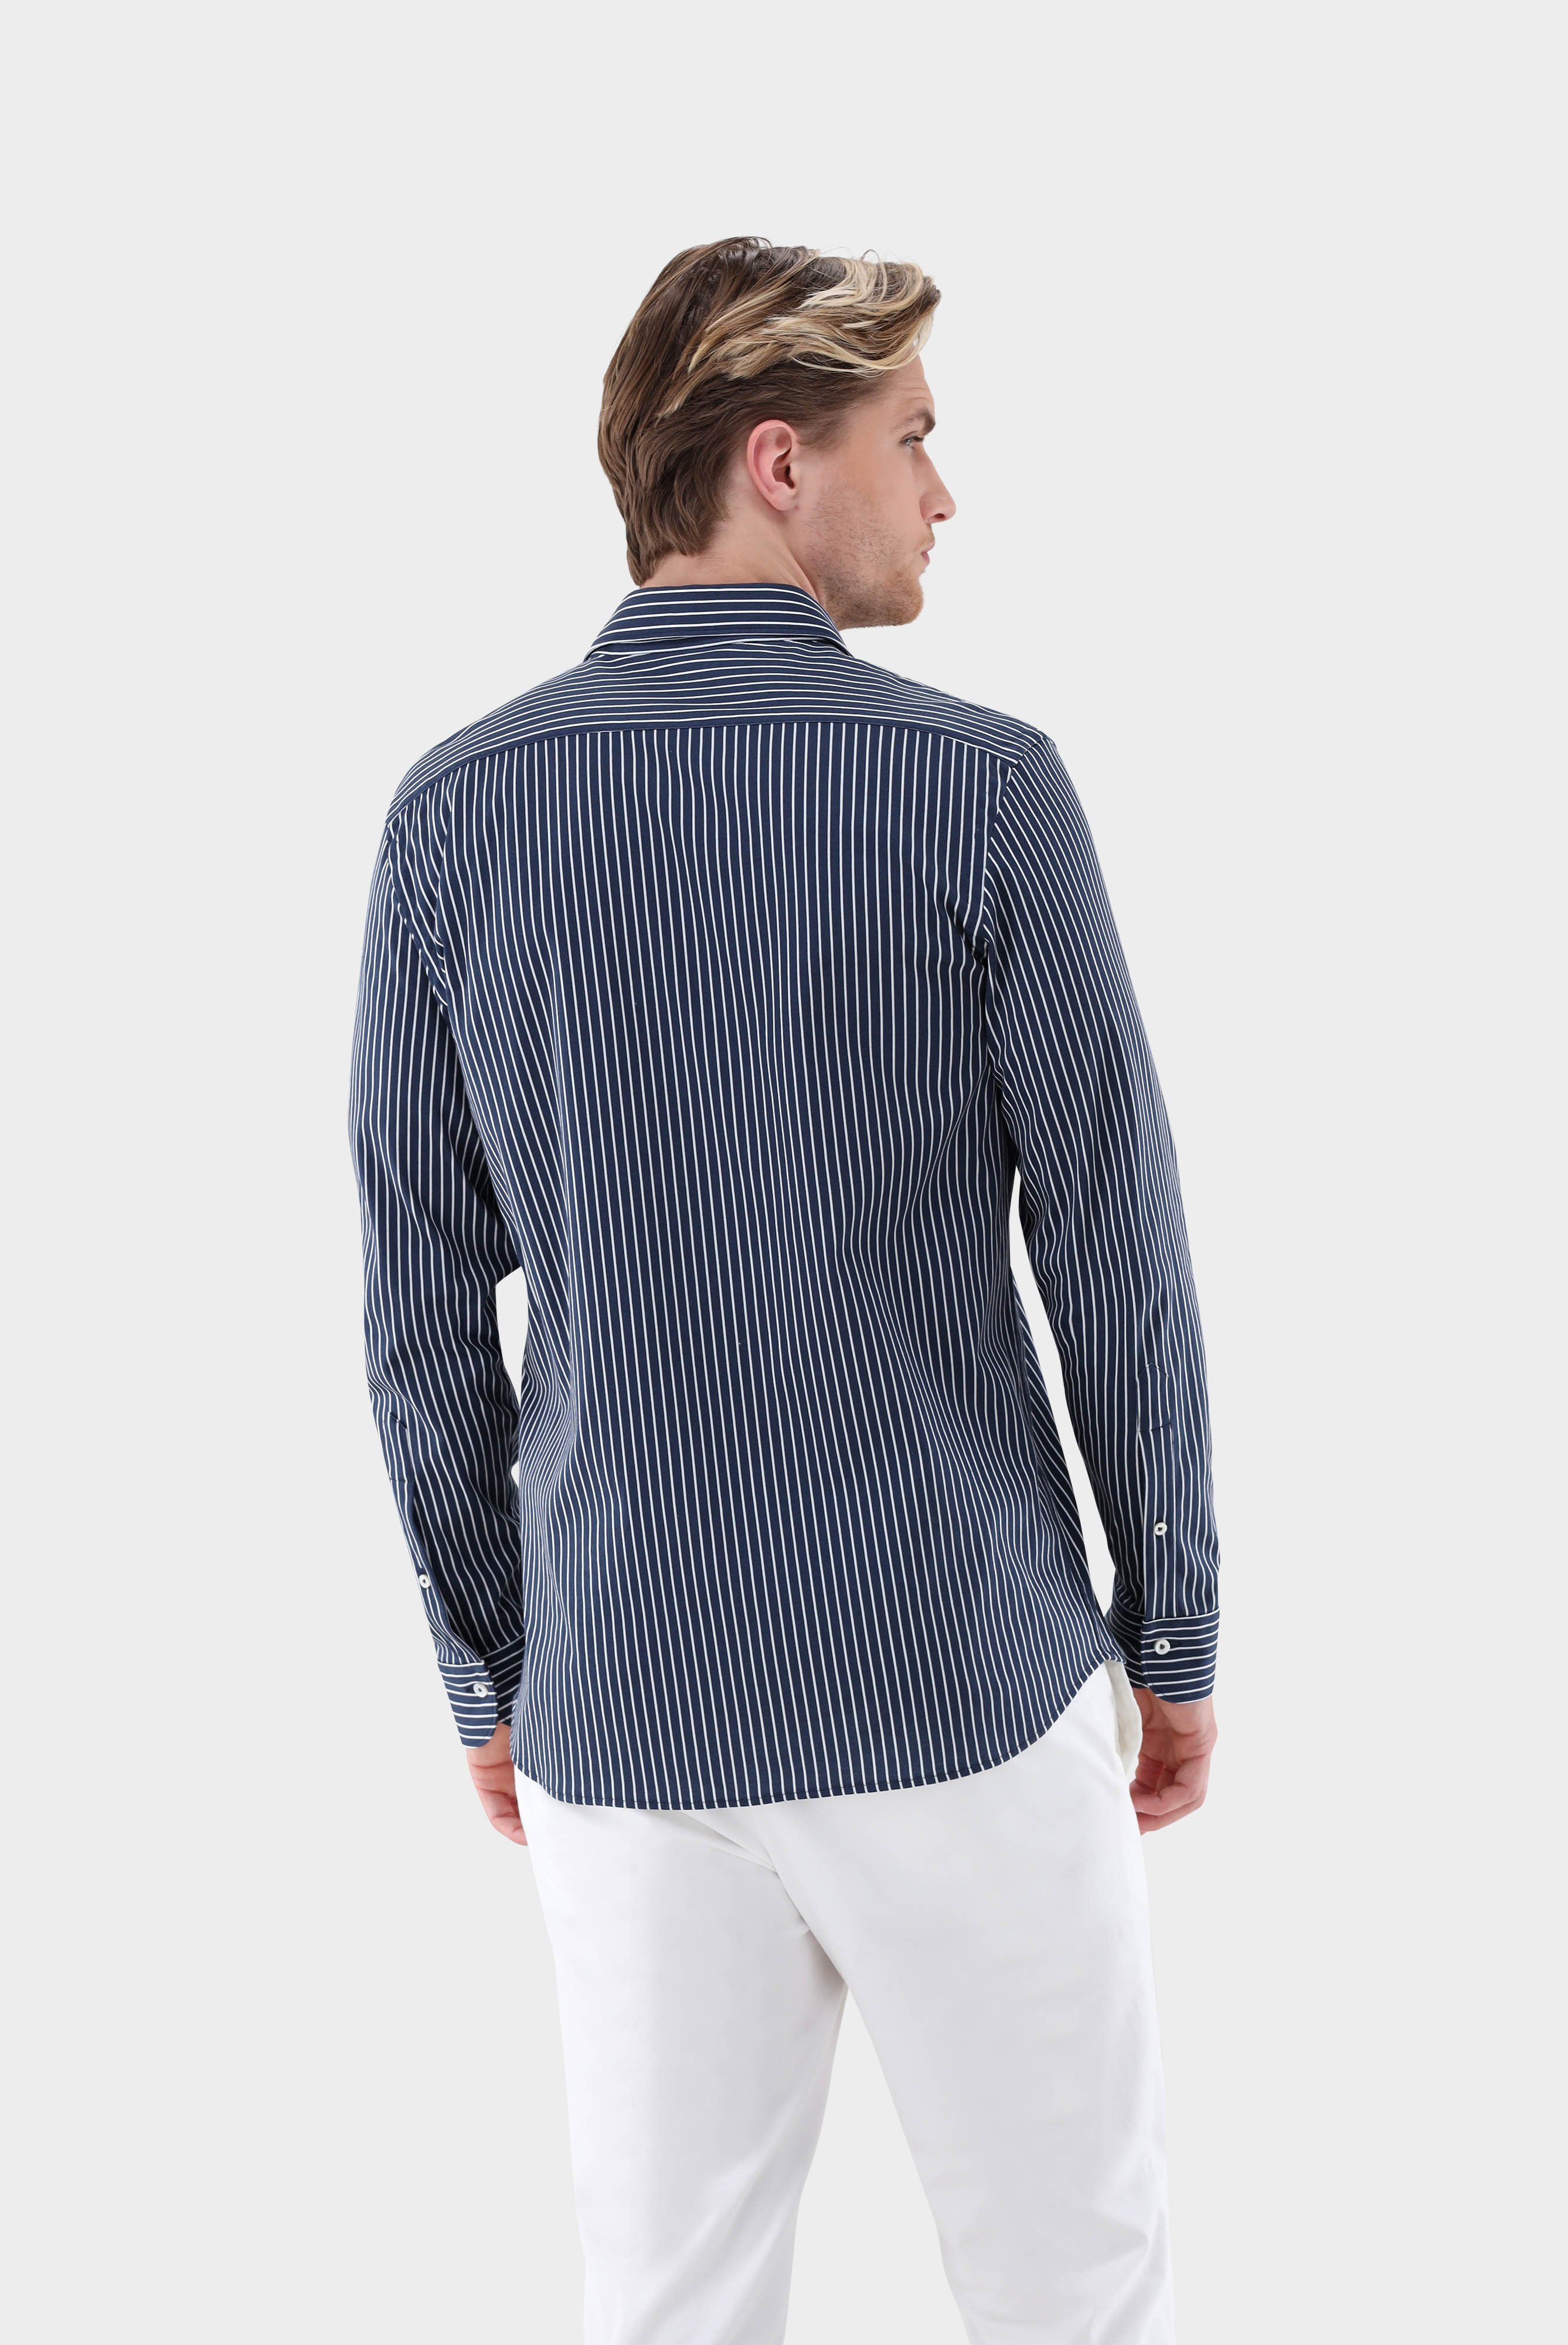 Jersey Shirts+Jersey Pinstripe Print Shirt in Swiss Cotton+20.1683.WI.187755.790.S